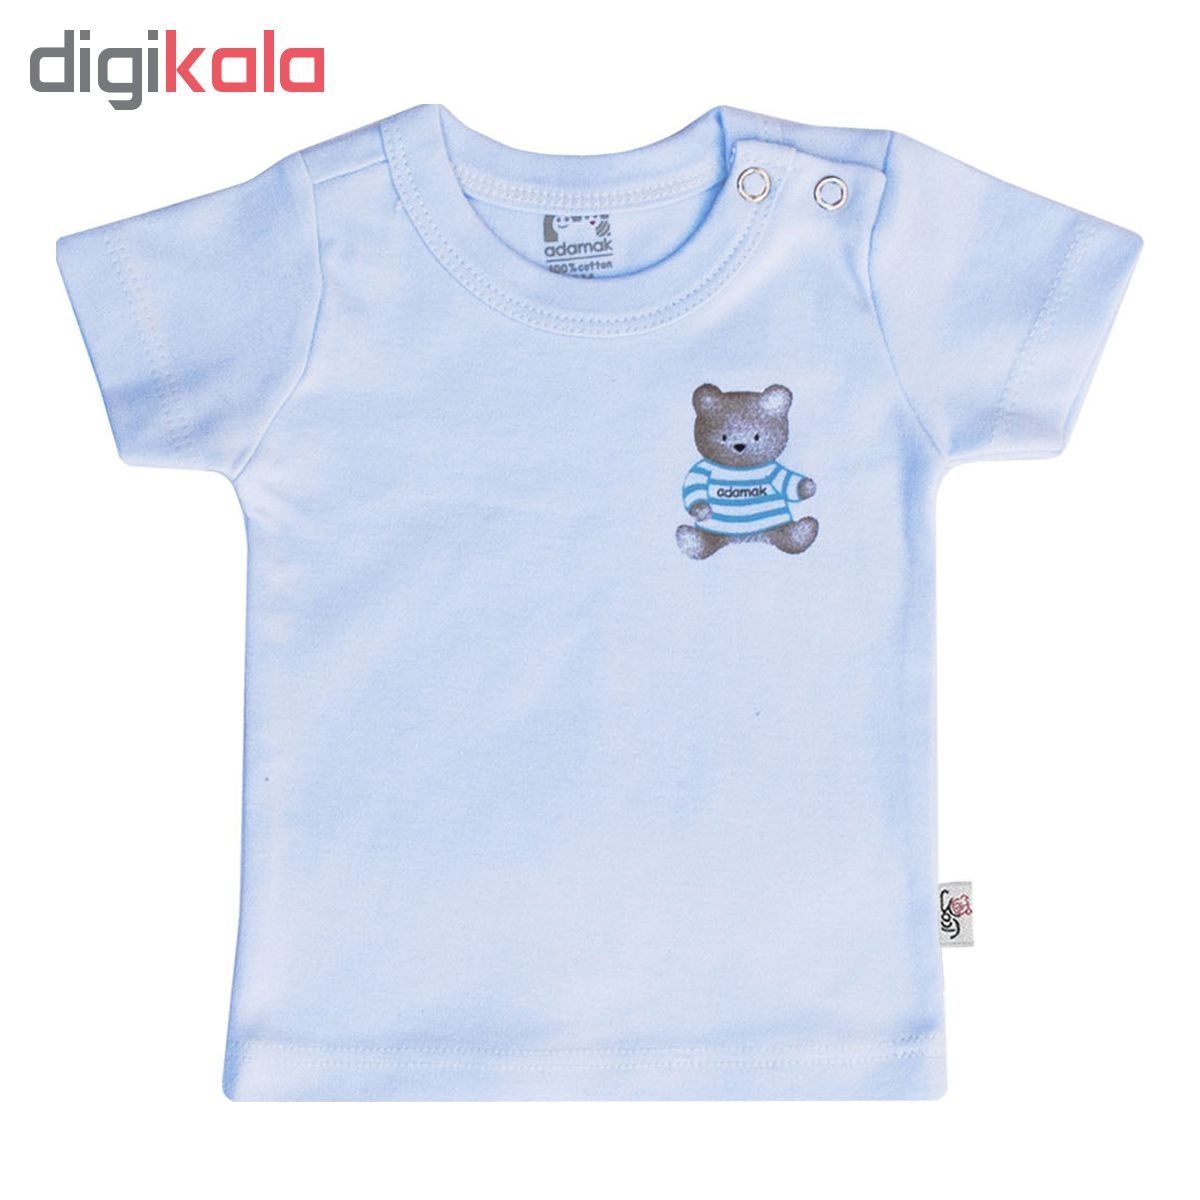  تی شرت آستین کوتاه نوزاد آدمک طرح خرس رنگ آبی